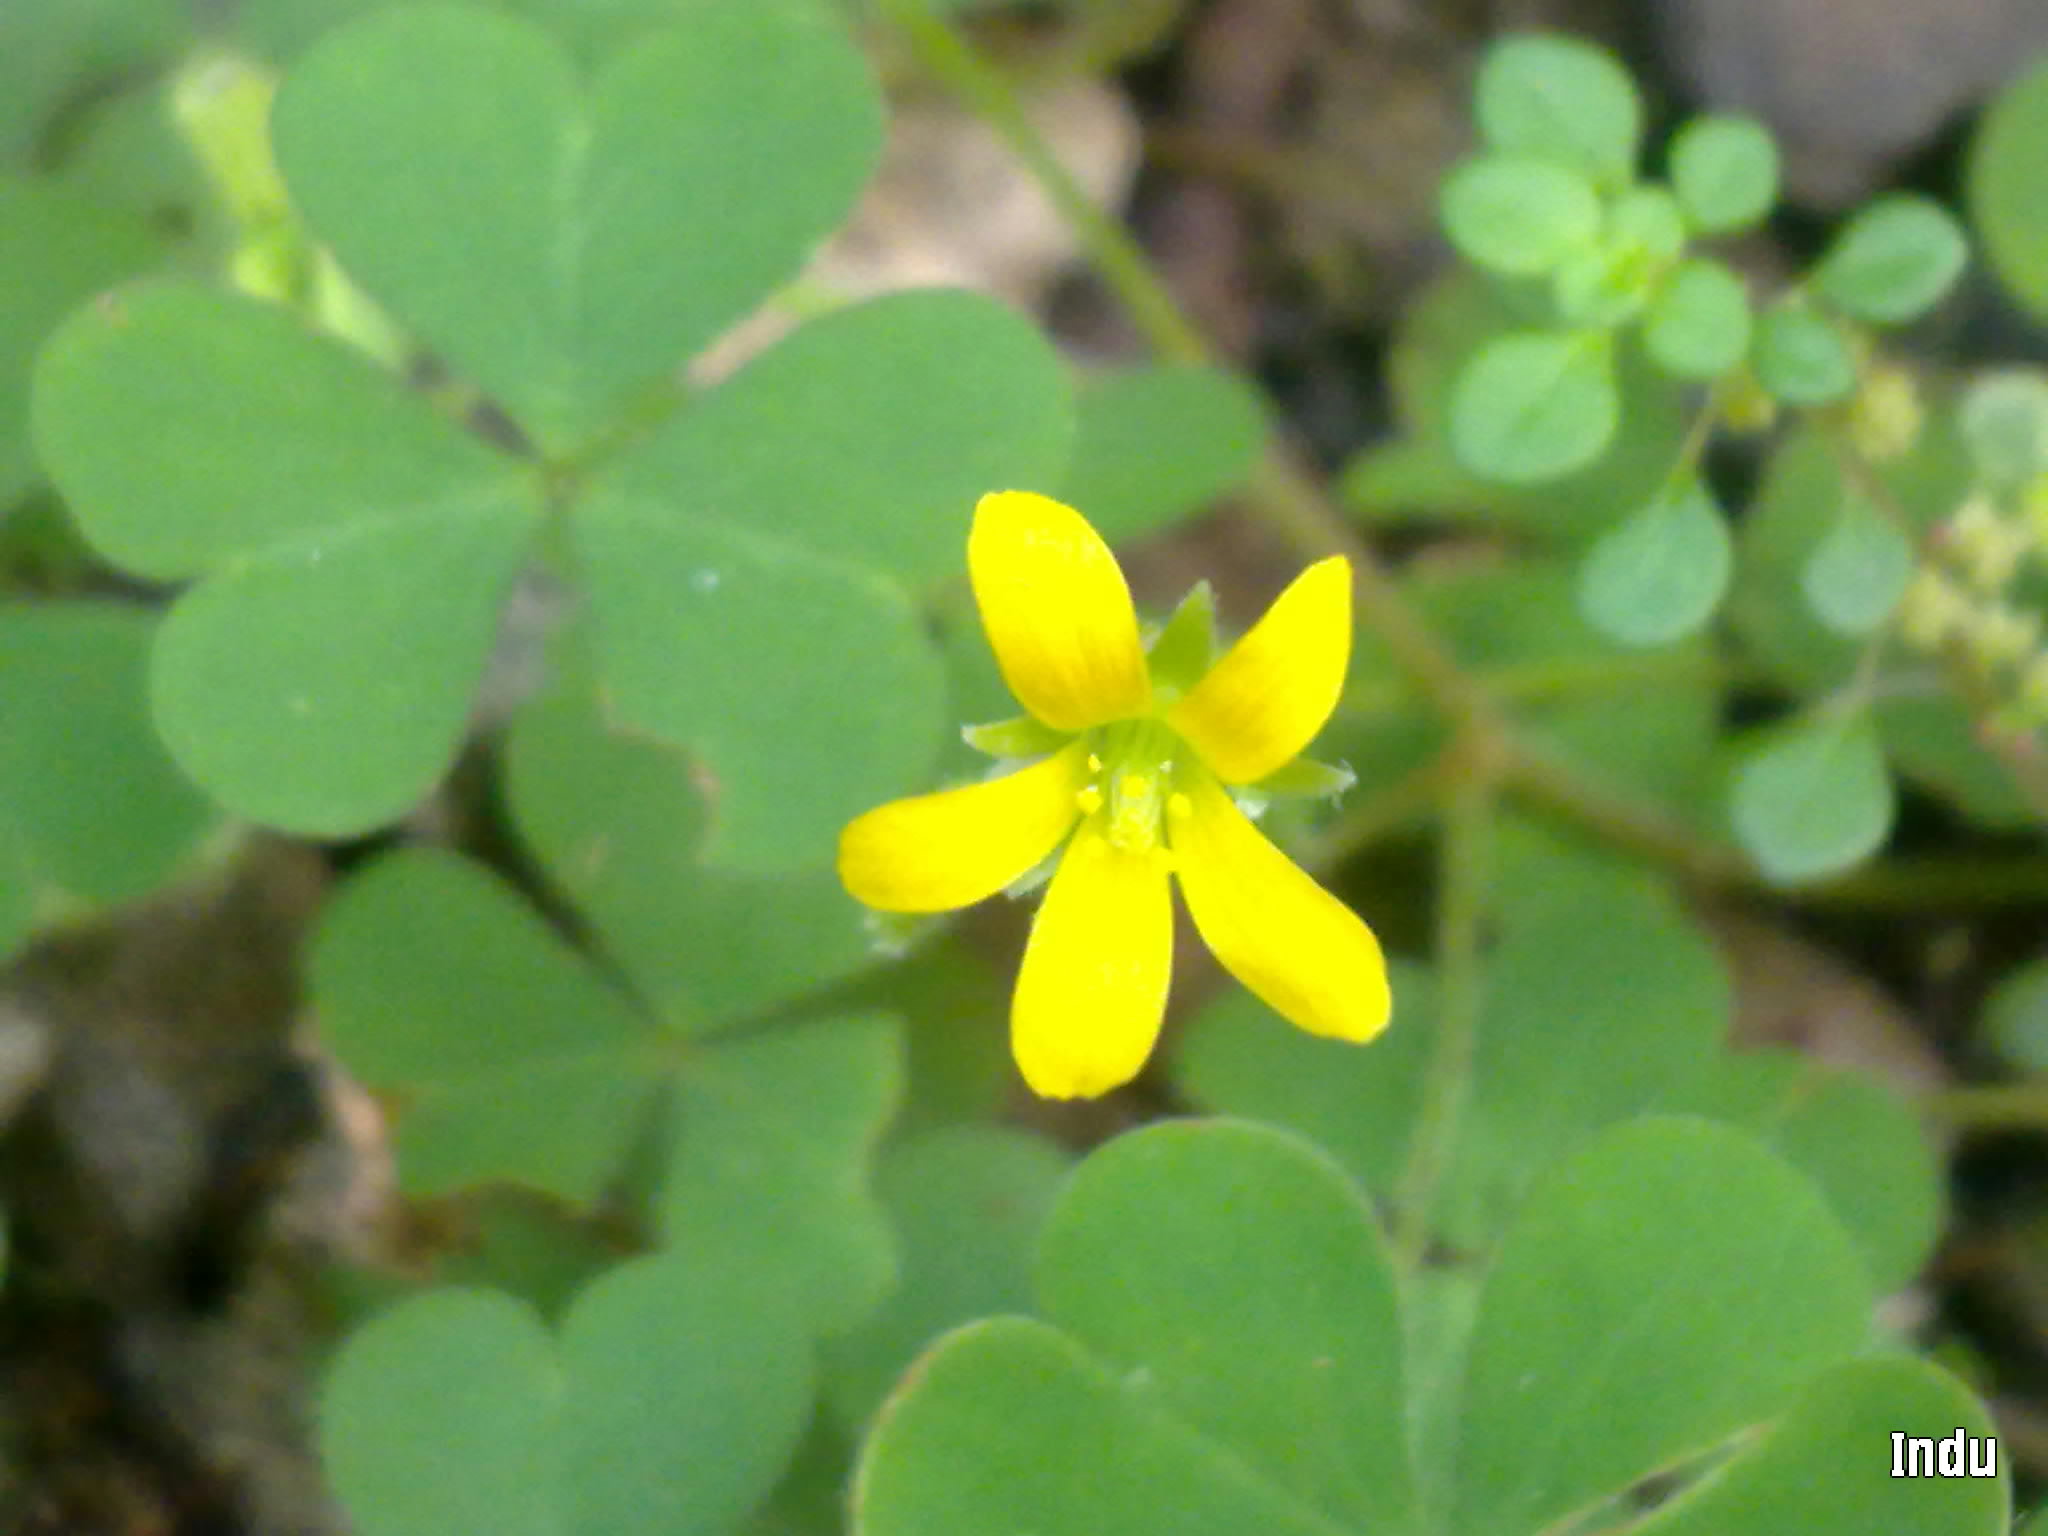 Tiny Yellow Flowers | Flower Blog by Indu Pillai